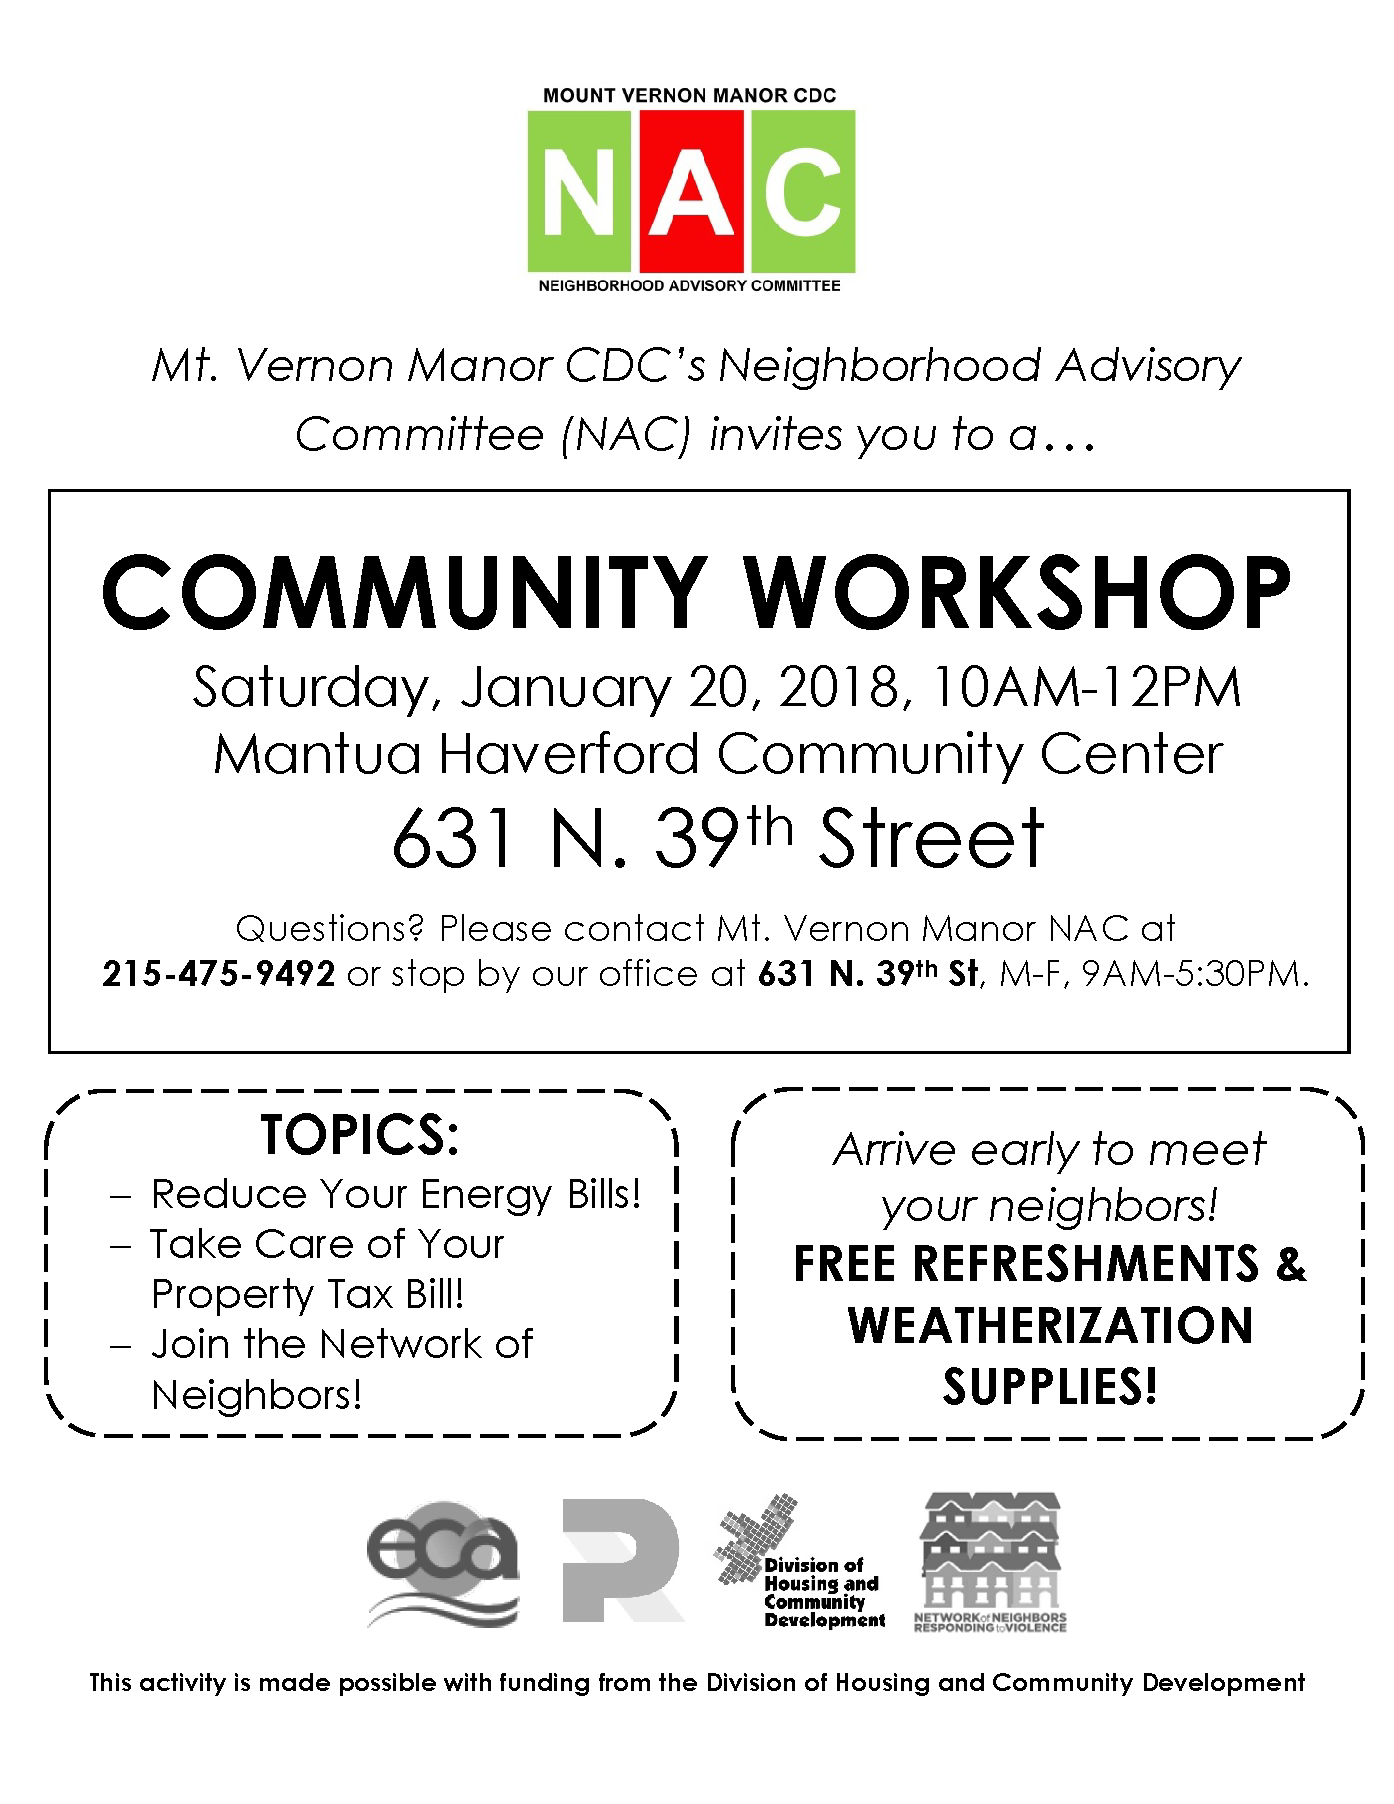 January 20 Community Workshop Flyer